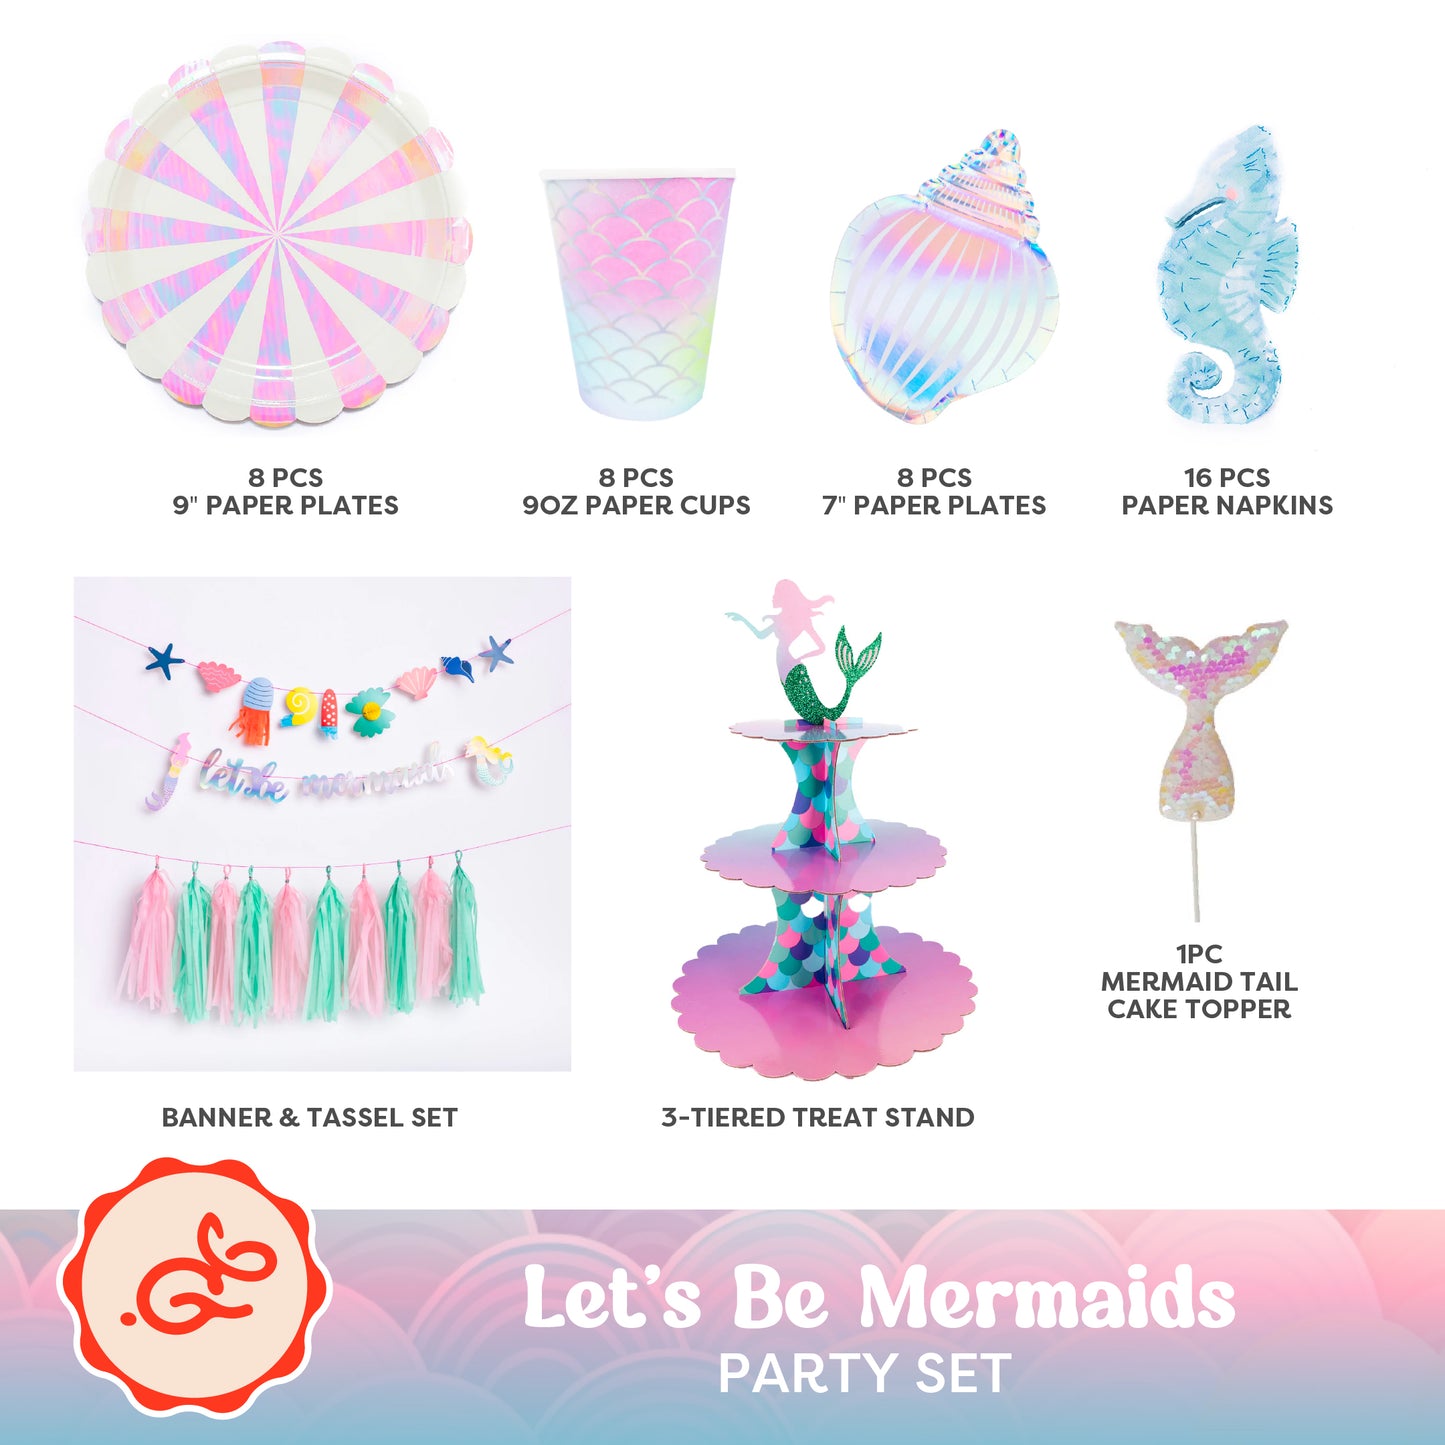 Let's Be Mermaids Party Set